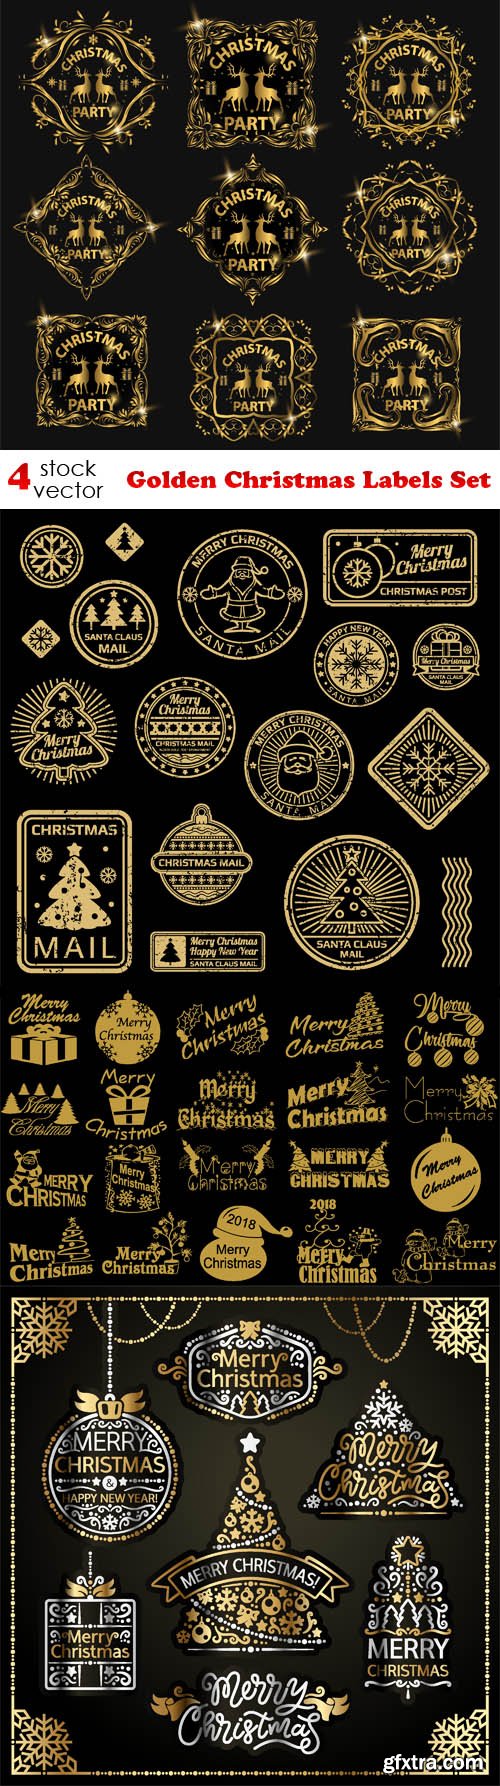 Vectors - Golden Christmas Labels Set